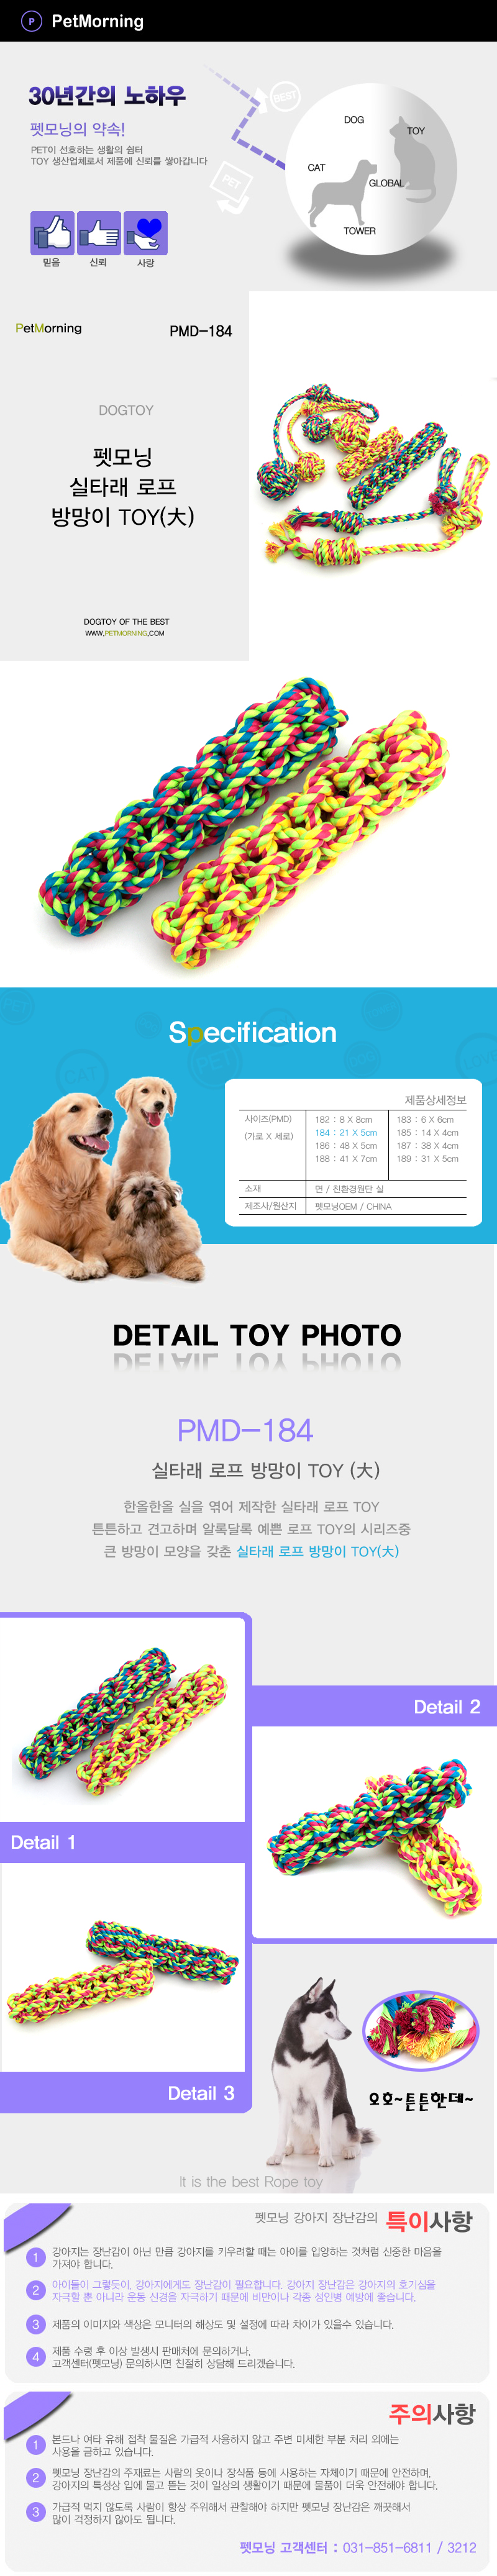 PMD-184_800_detail.jpg